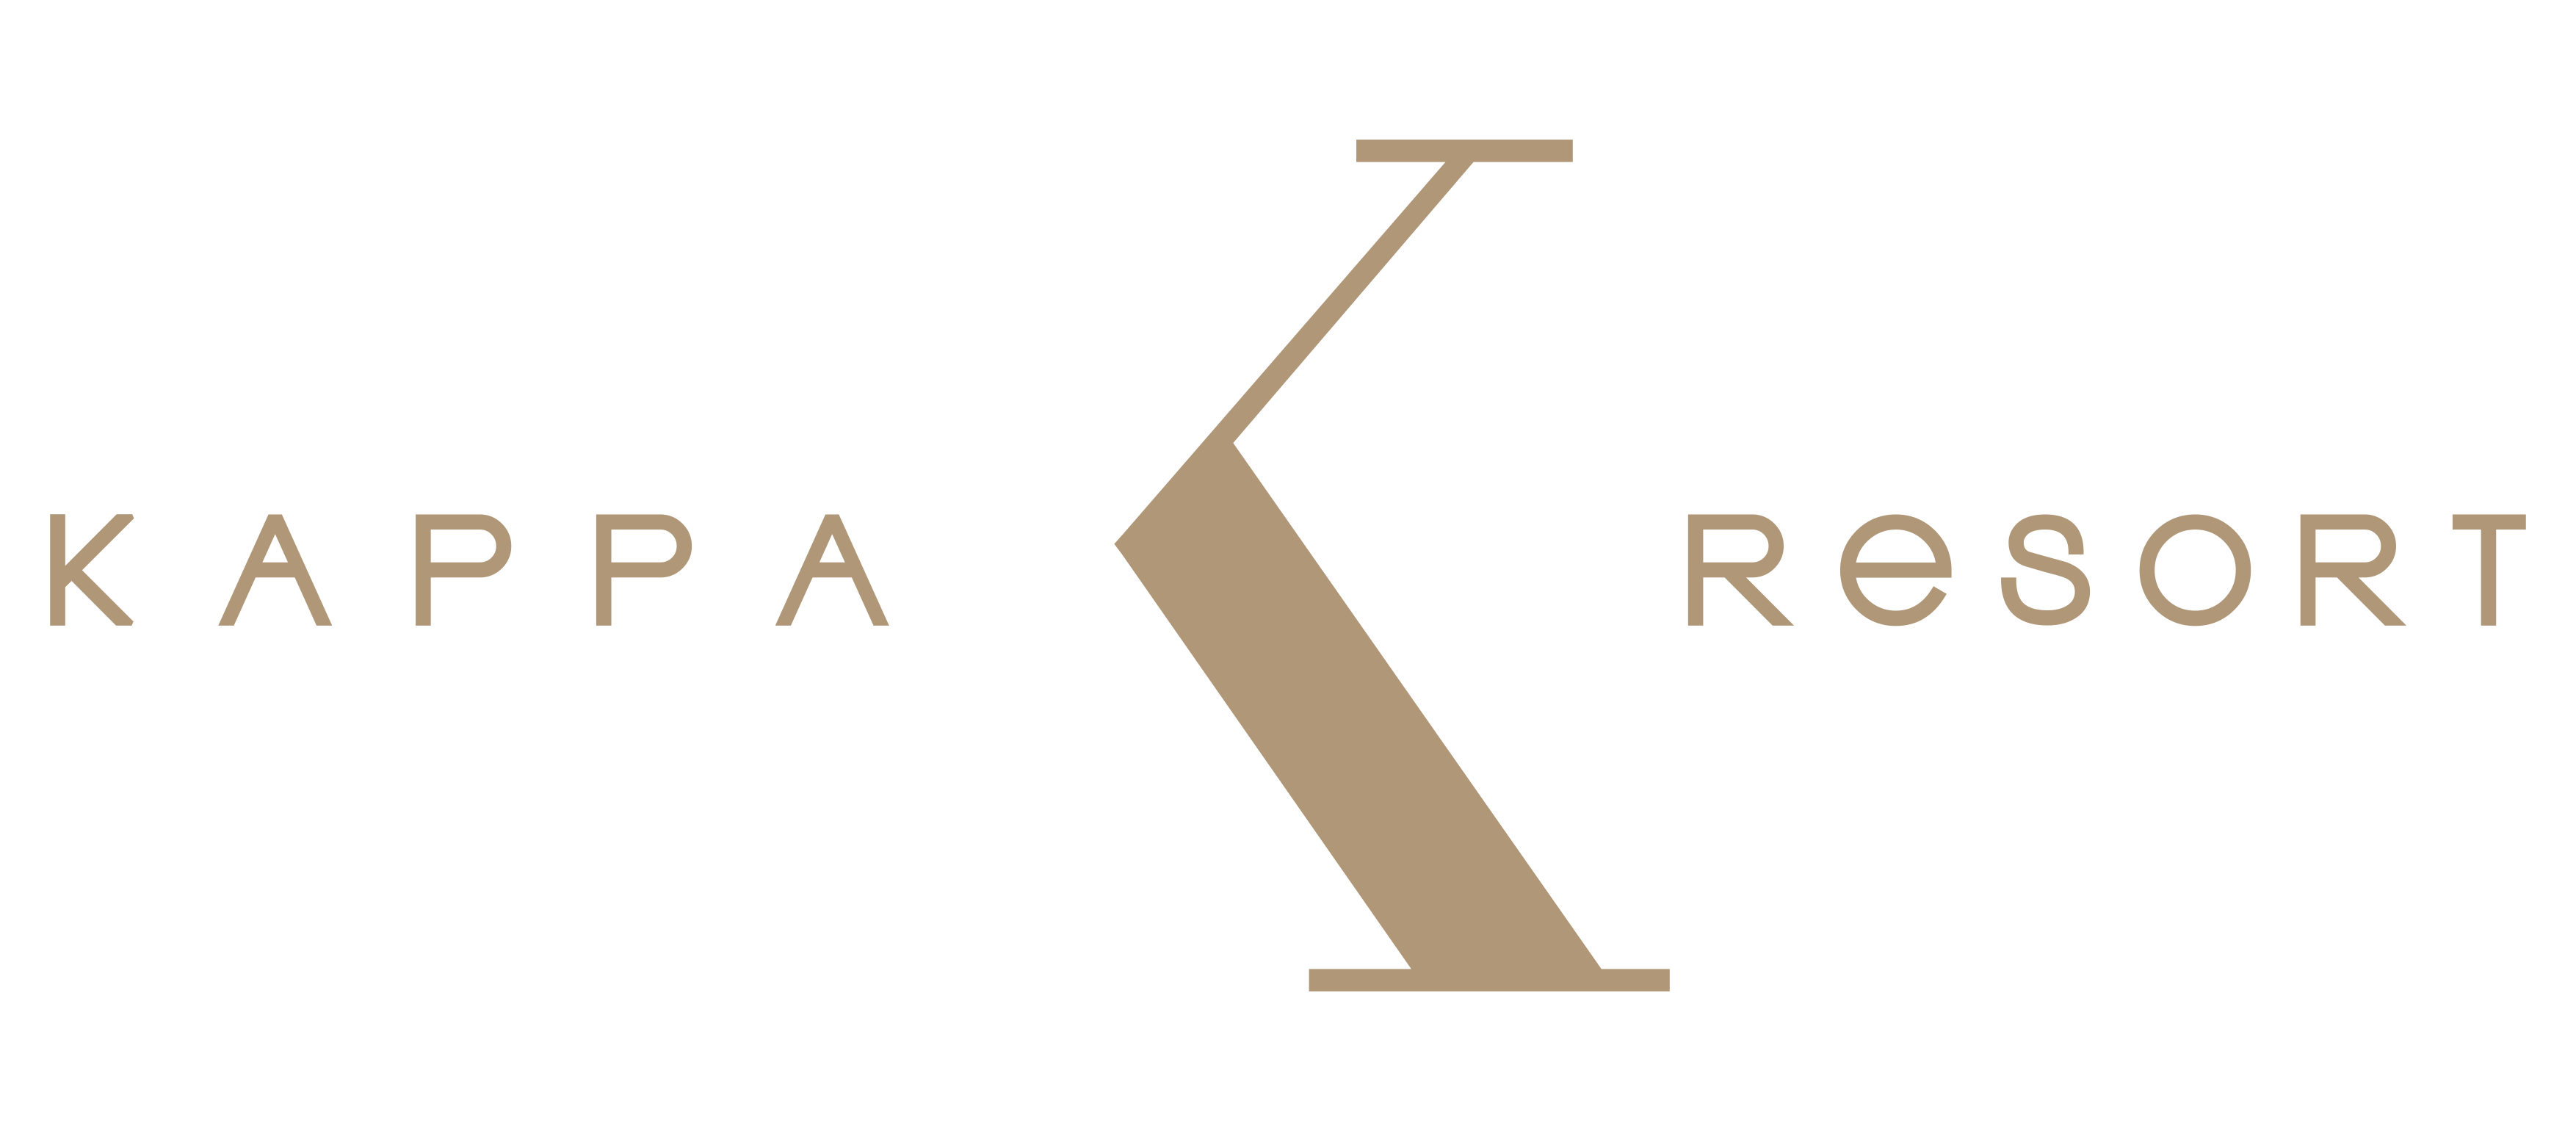 KAPPA RESORT Logo 1